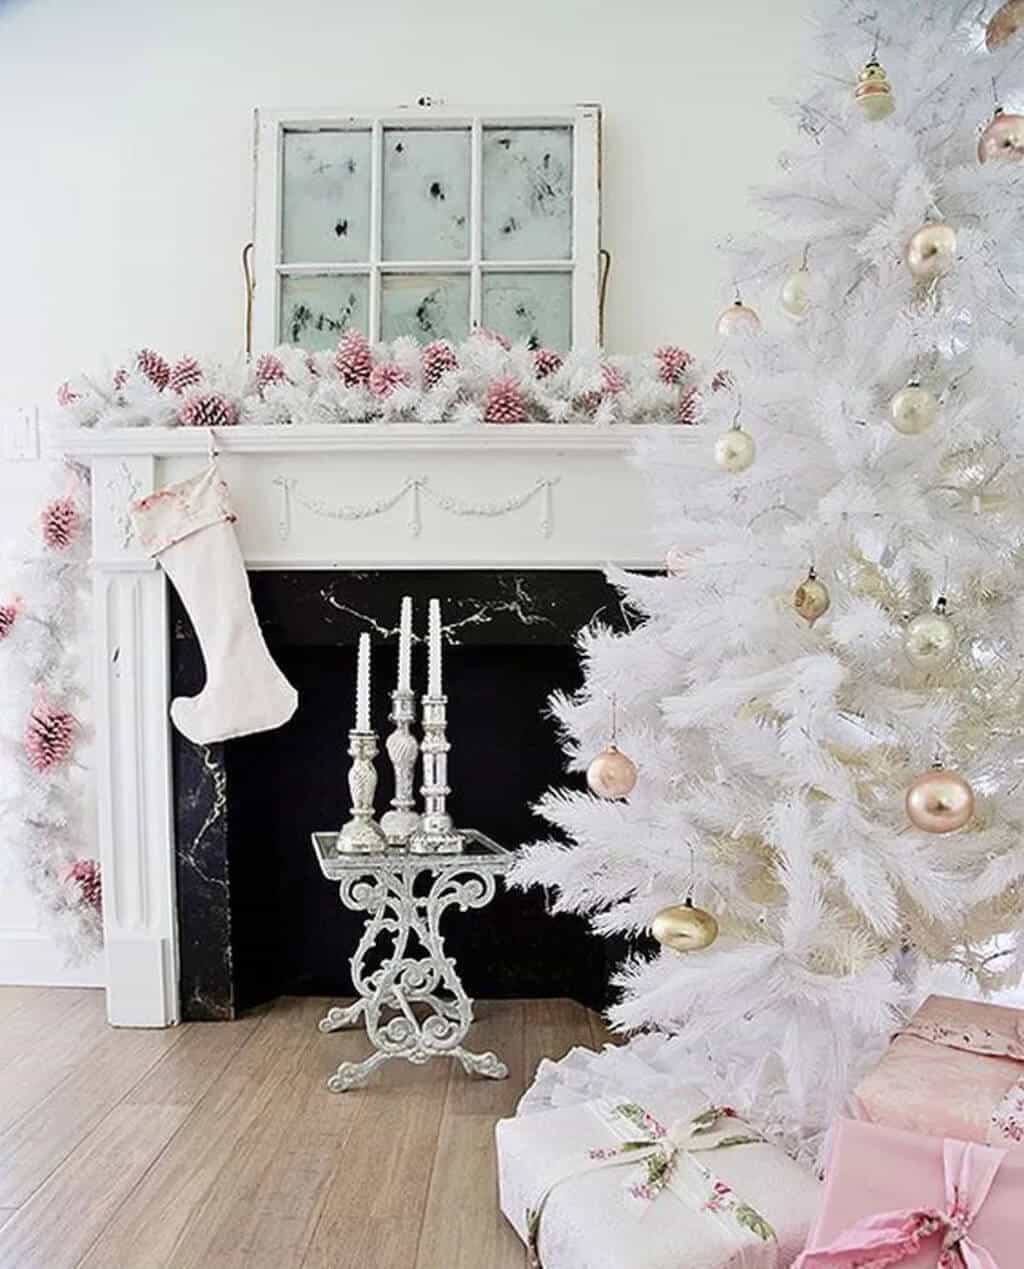 The Shiny Metallics and White Christmas Tree